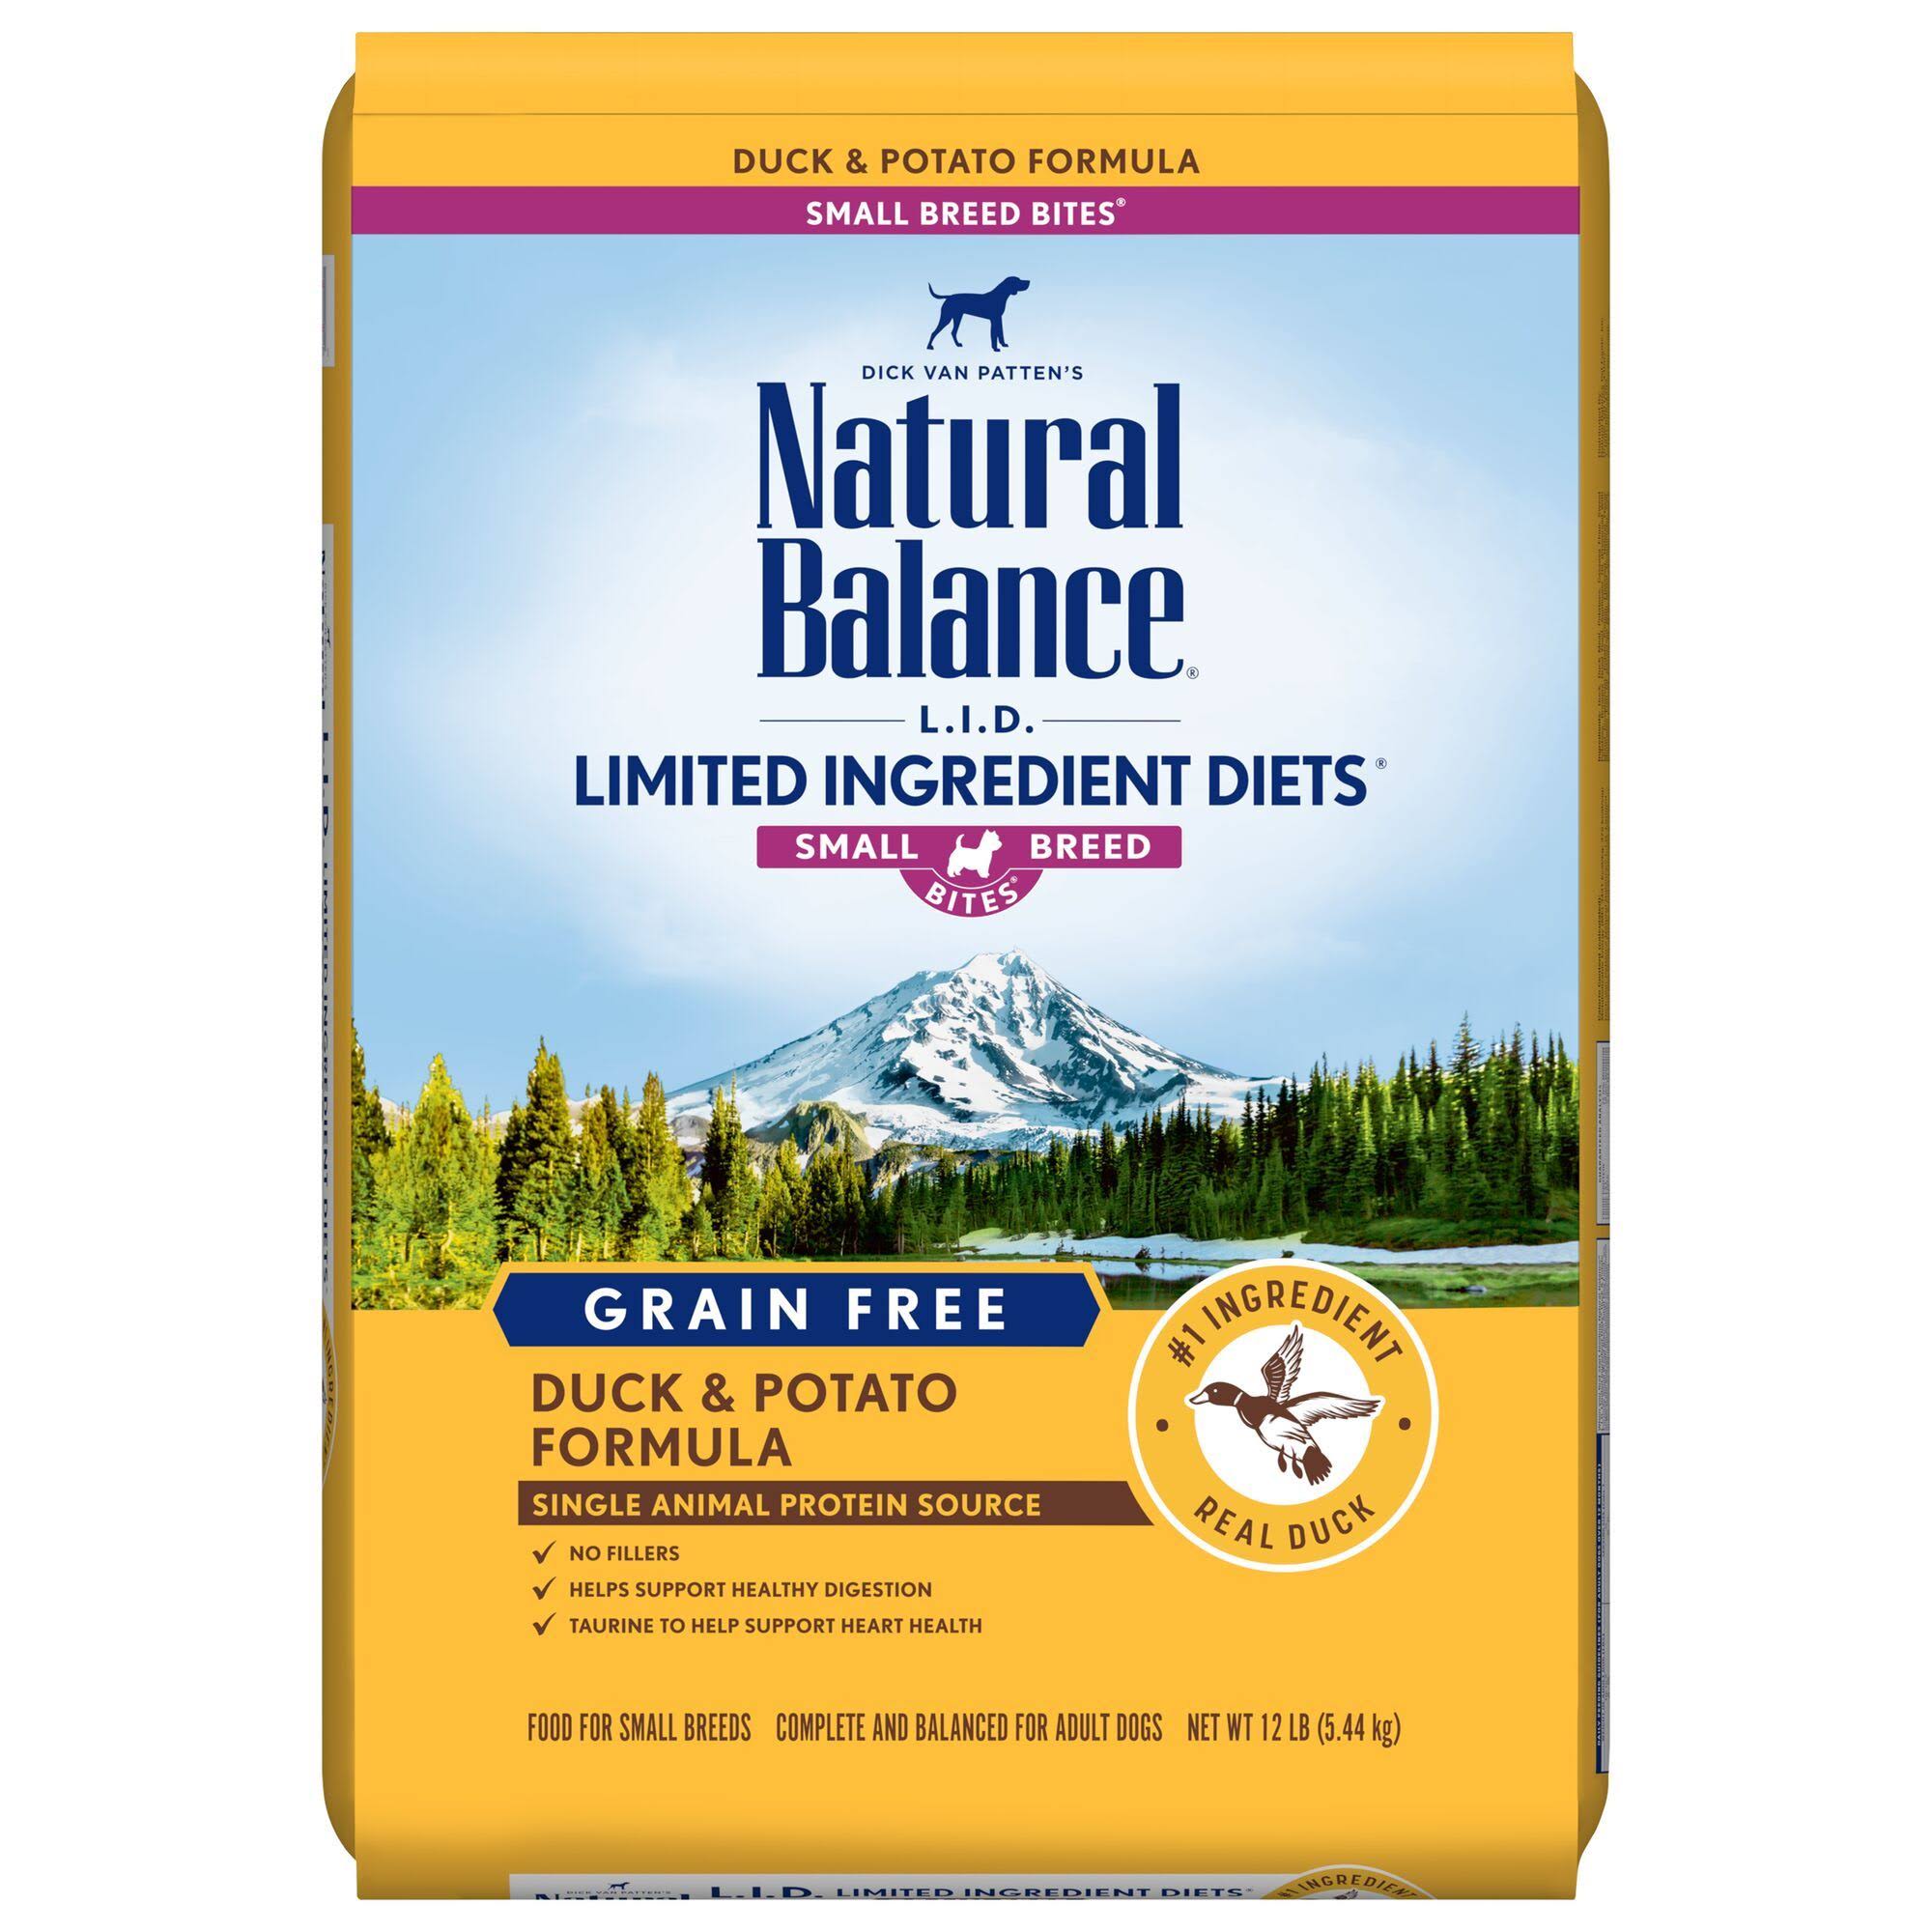 Natural Balance Limited Ingredients Diet Small Breed Bites Dog Food, Duck & Potato Formula, Grain Free, - 12 lb